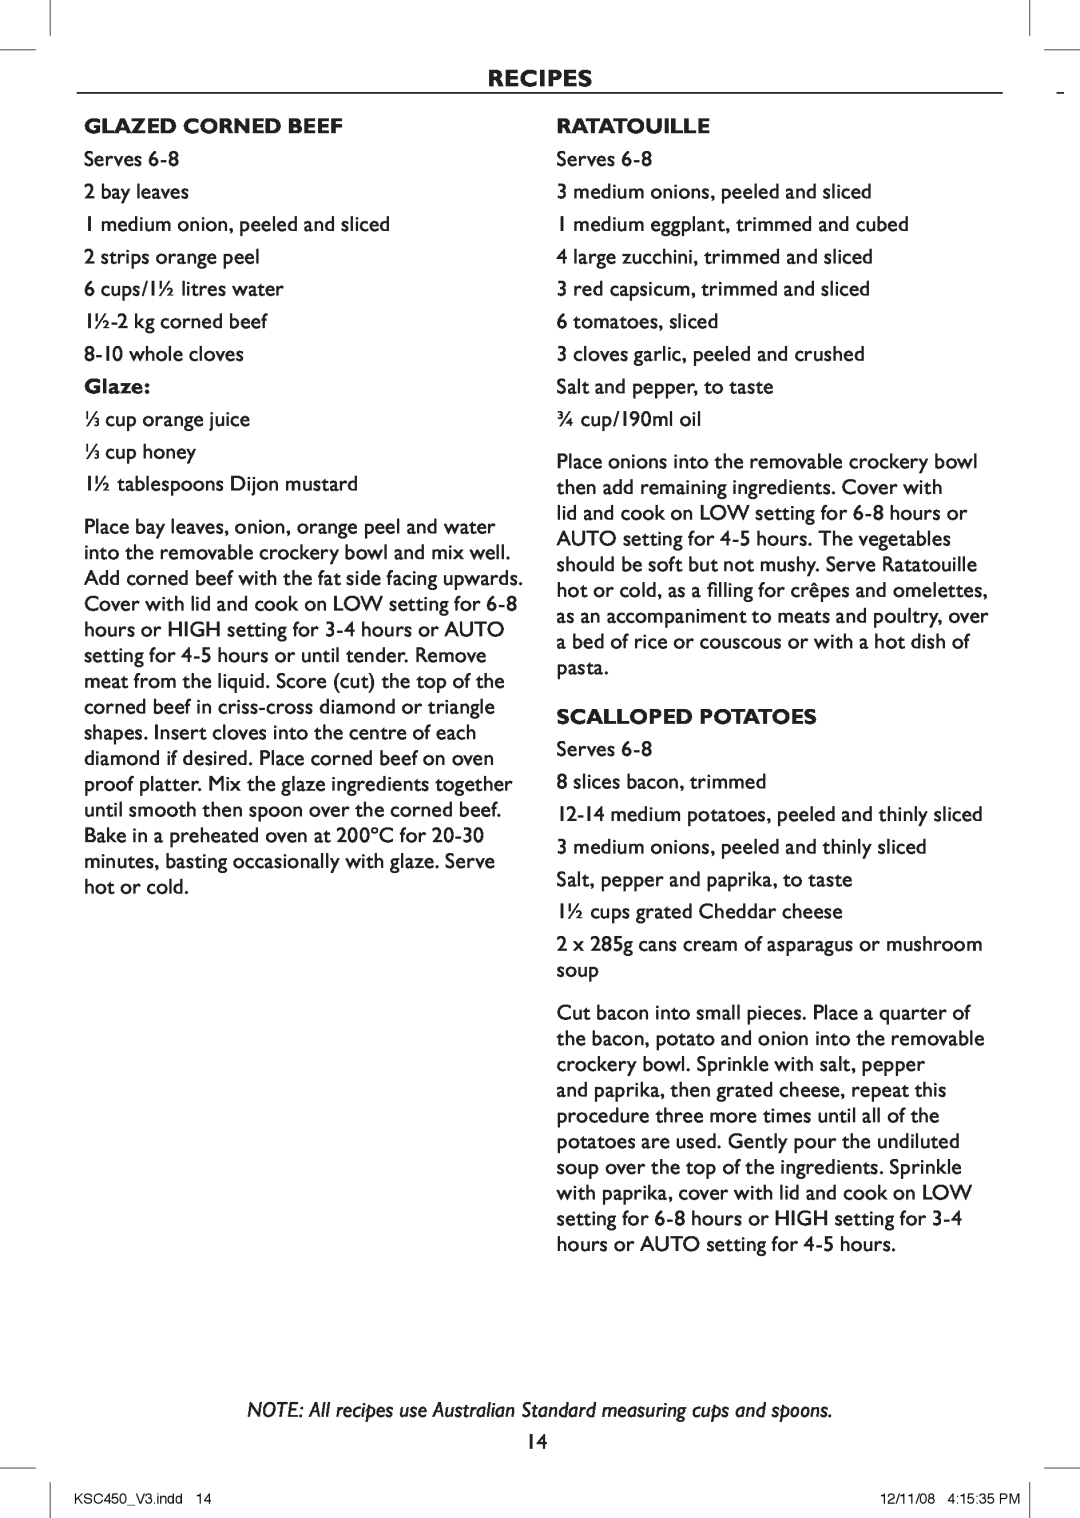 Kambrook KSC450 manual Recipes, Glazed Corned Beef, Ratatouille, Scalloped Potatoes 